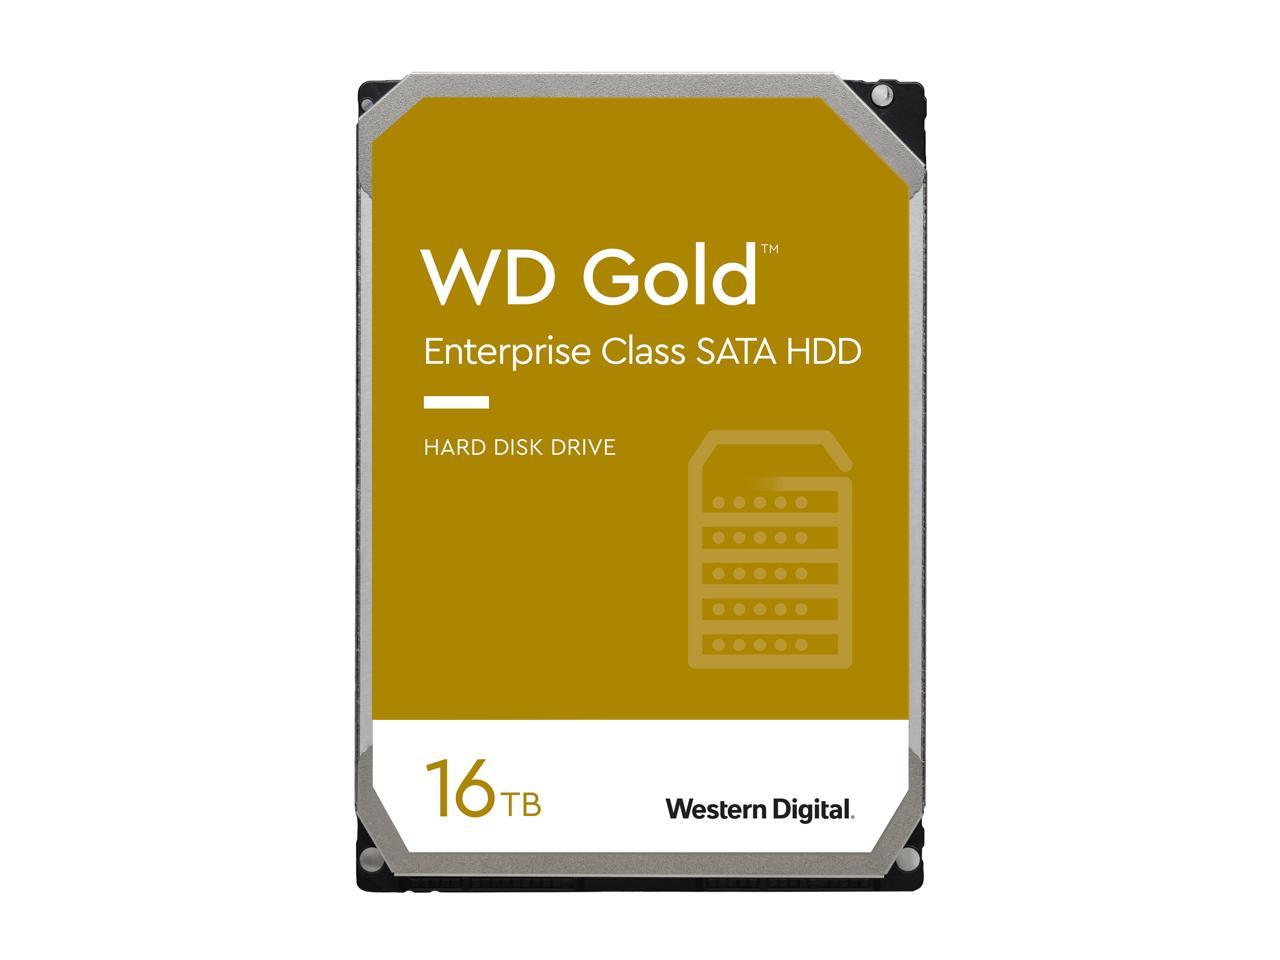 Wd Gold 16Tb Enterprise Class Hard Disk Drive - 7200 Rpm Class Sata 6Gb/S 512Mb Cache 3.5 Inch - Wd161Kryz